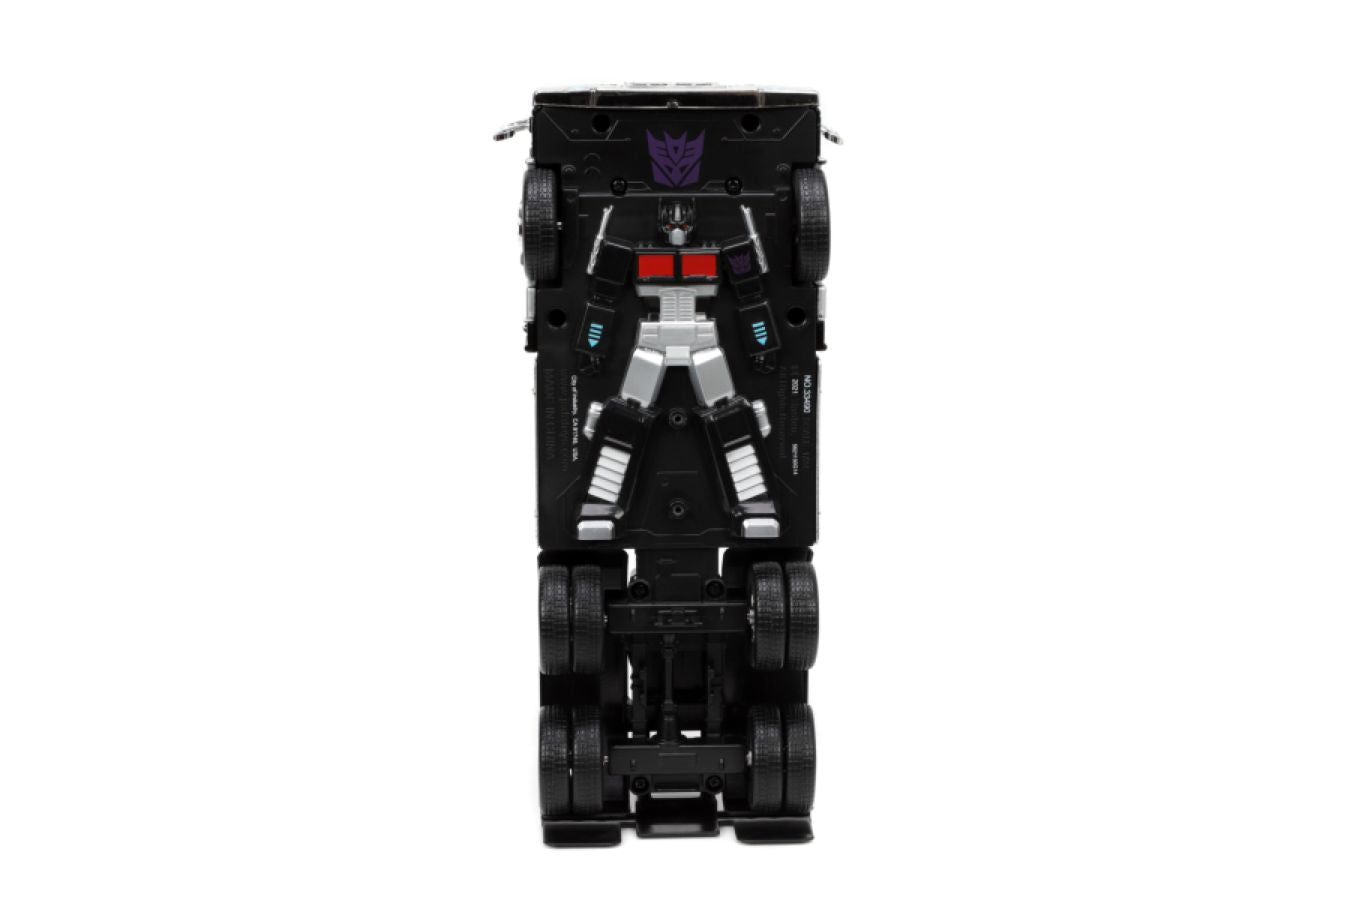 Transformers (TV) - Nemesis Prime Black 1:24 Scale Hollywood Ride